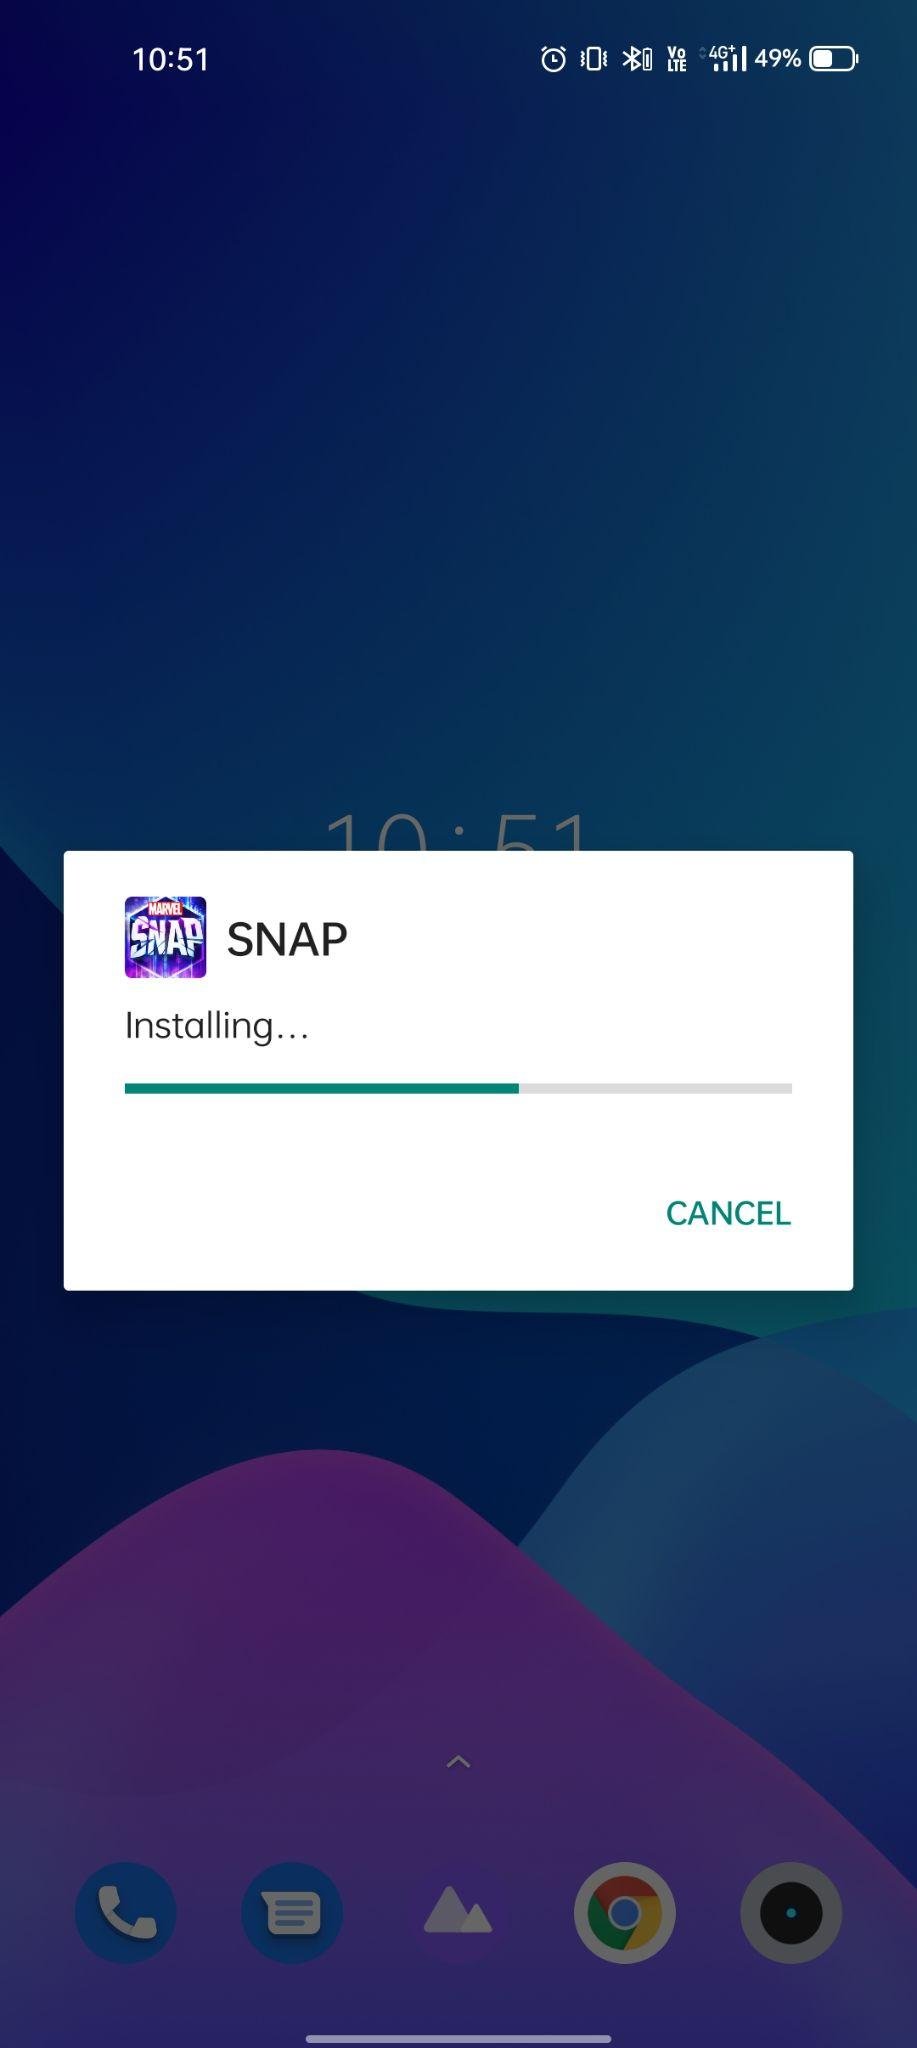 snap apk installing